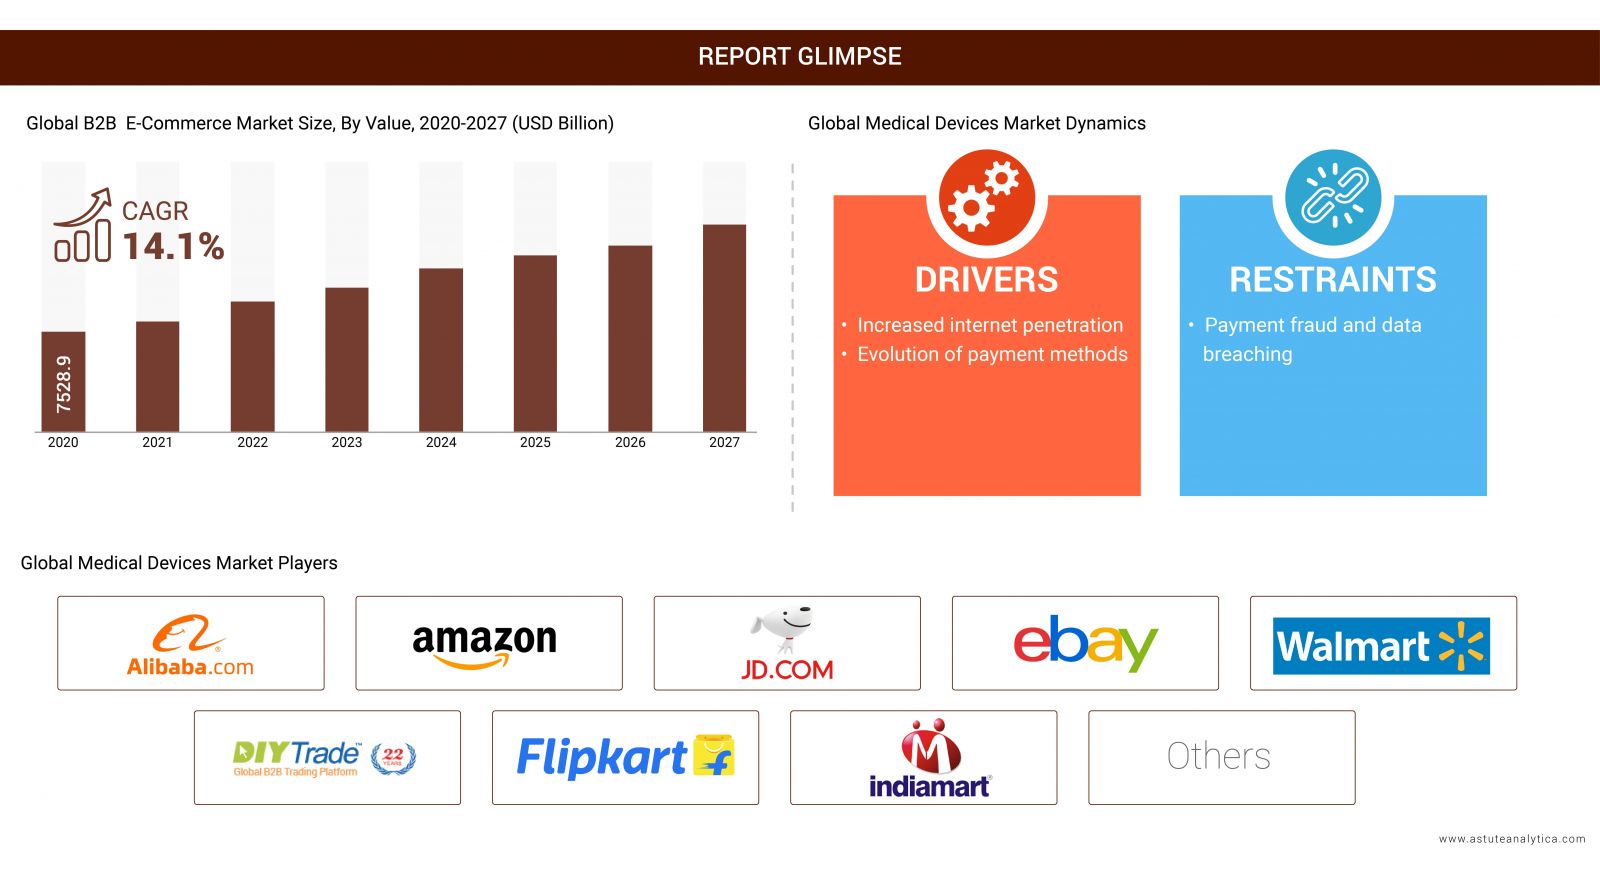 B2B E-commerce Market Report Glimpse